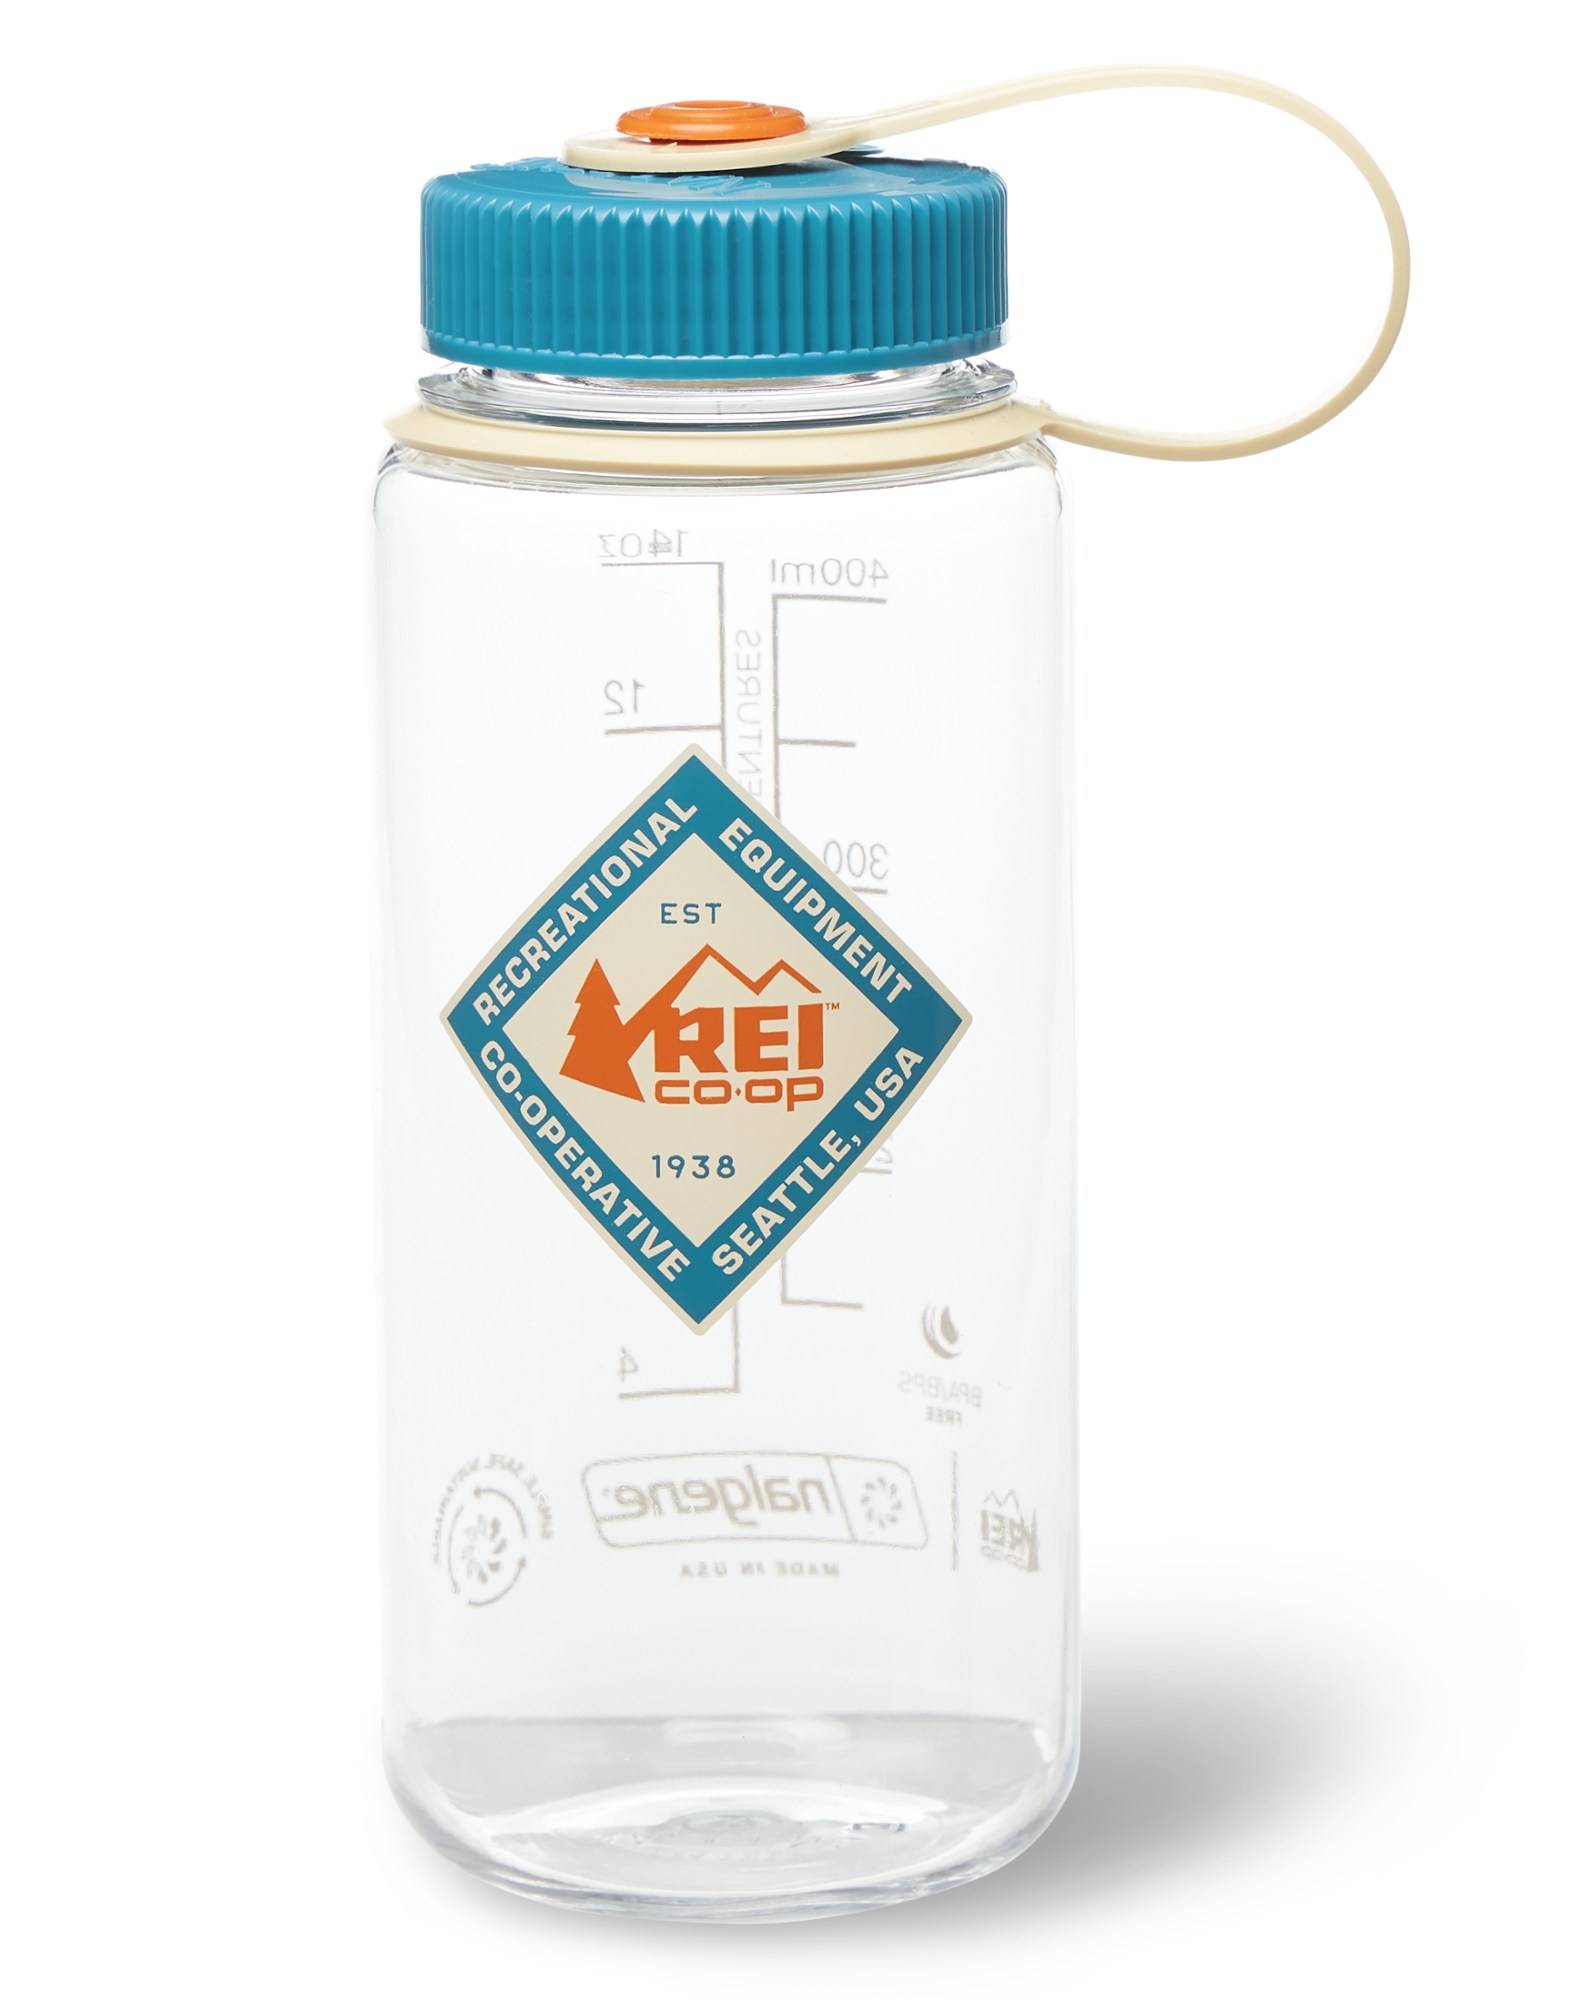 Бутылка для воды Nalgene Sustain Graphic с широким горлышком - 16 эт. унция REI Co-op, белый